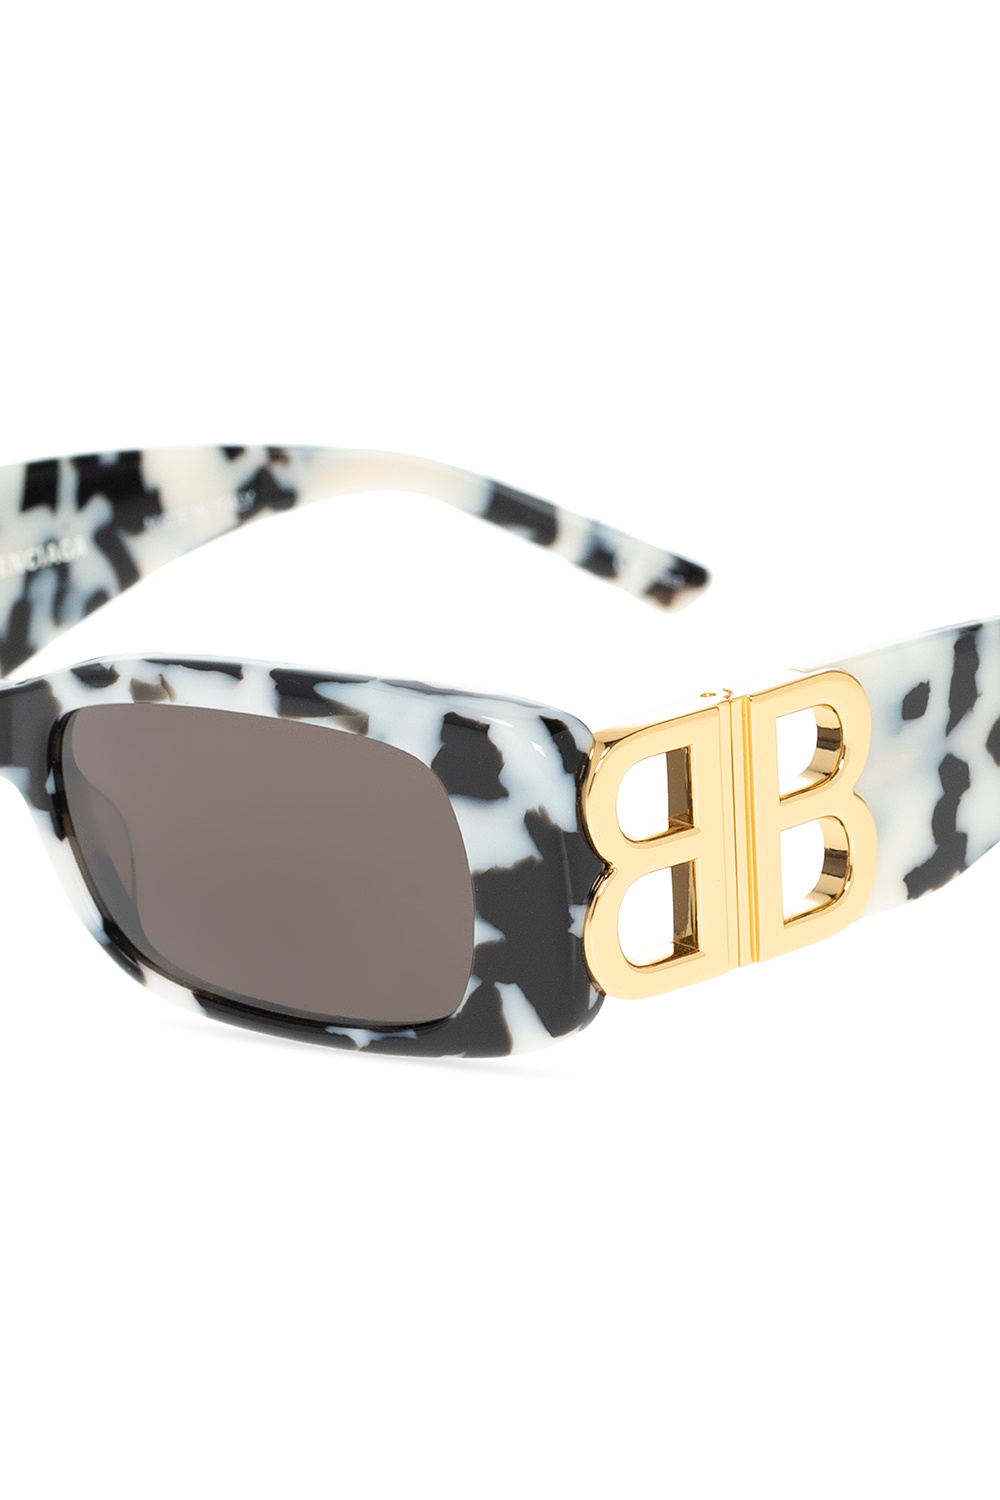 Balenciaga ‘Dynasty Rectangle’ sunglasses